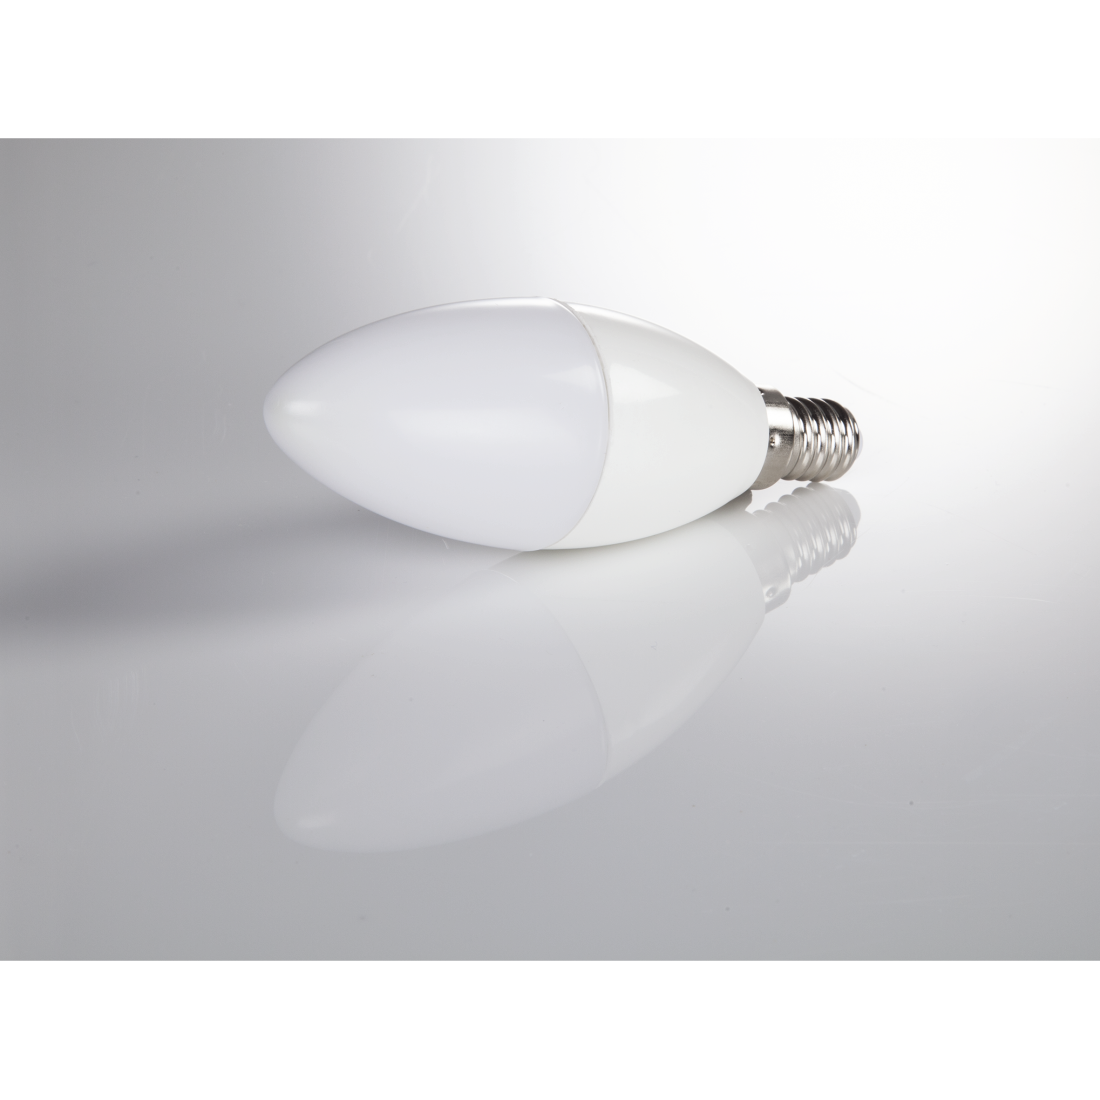 abx3 Druckfähige Abbildung 3 - Xavax, LED-Lampe, E14, 806lm ersetzt 60W, Kerzenlampe, Warmweiß